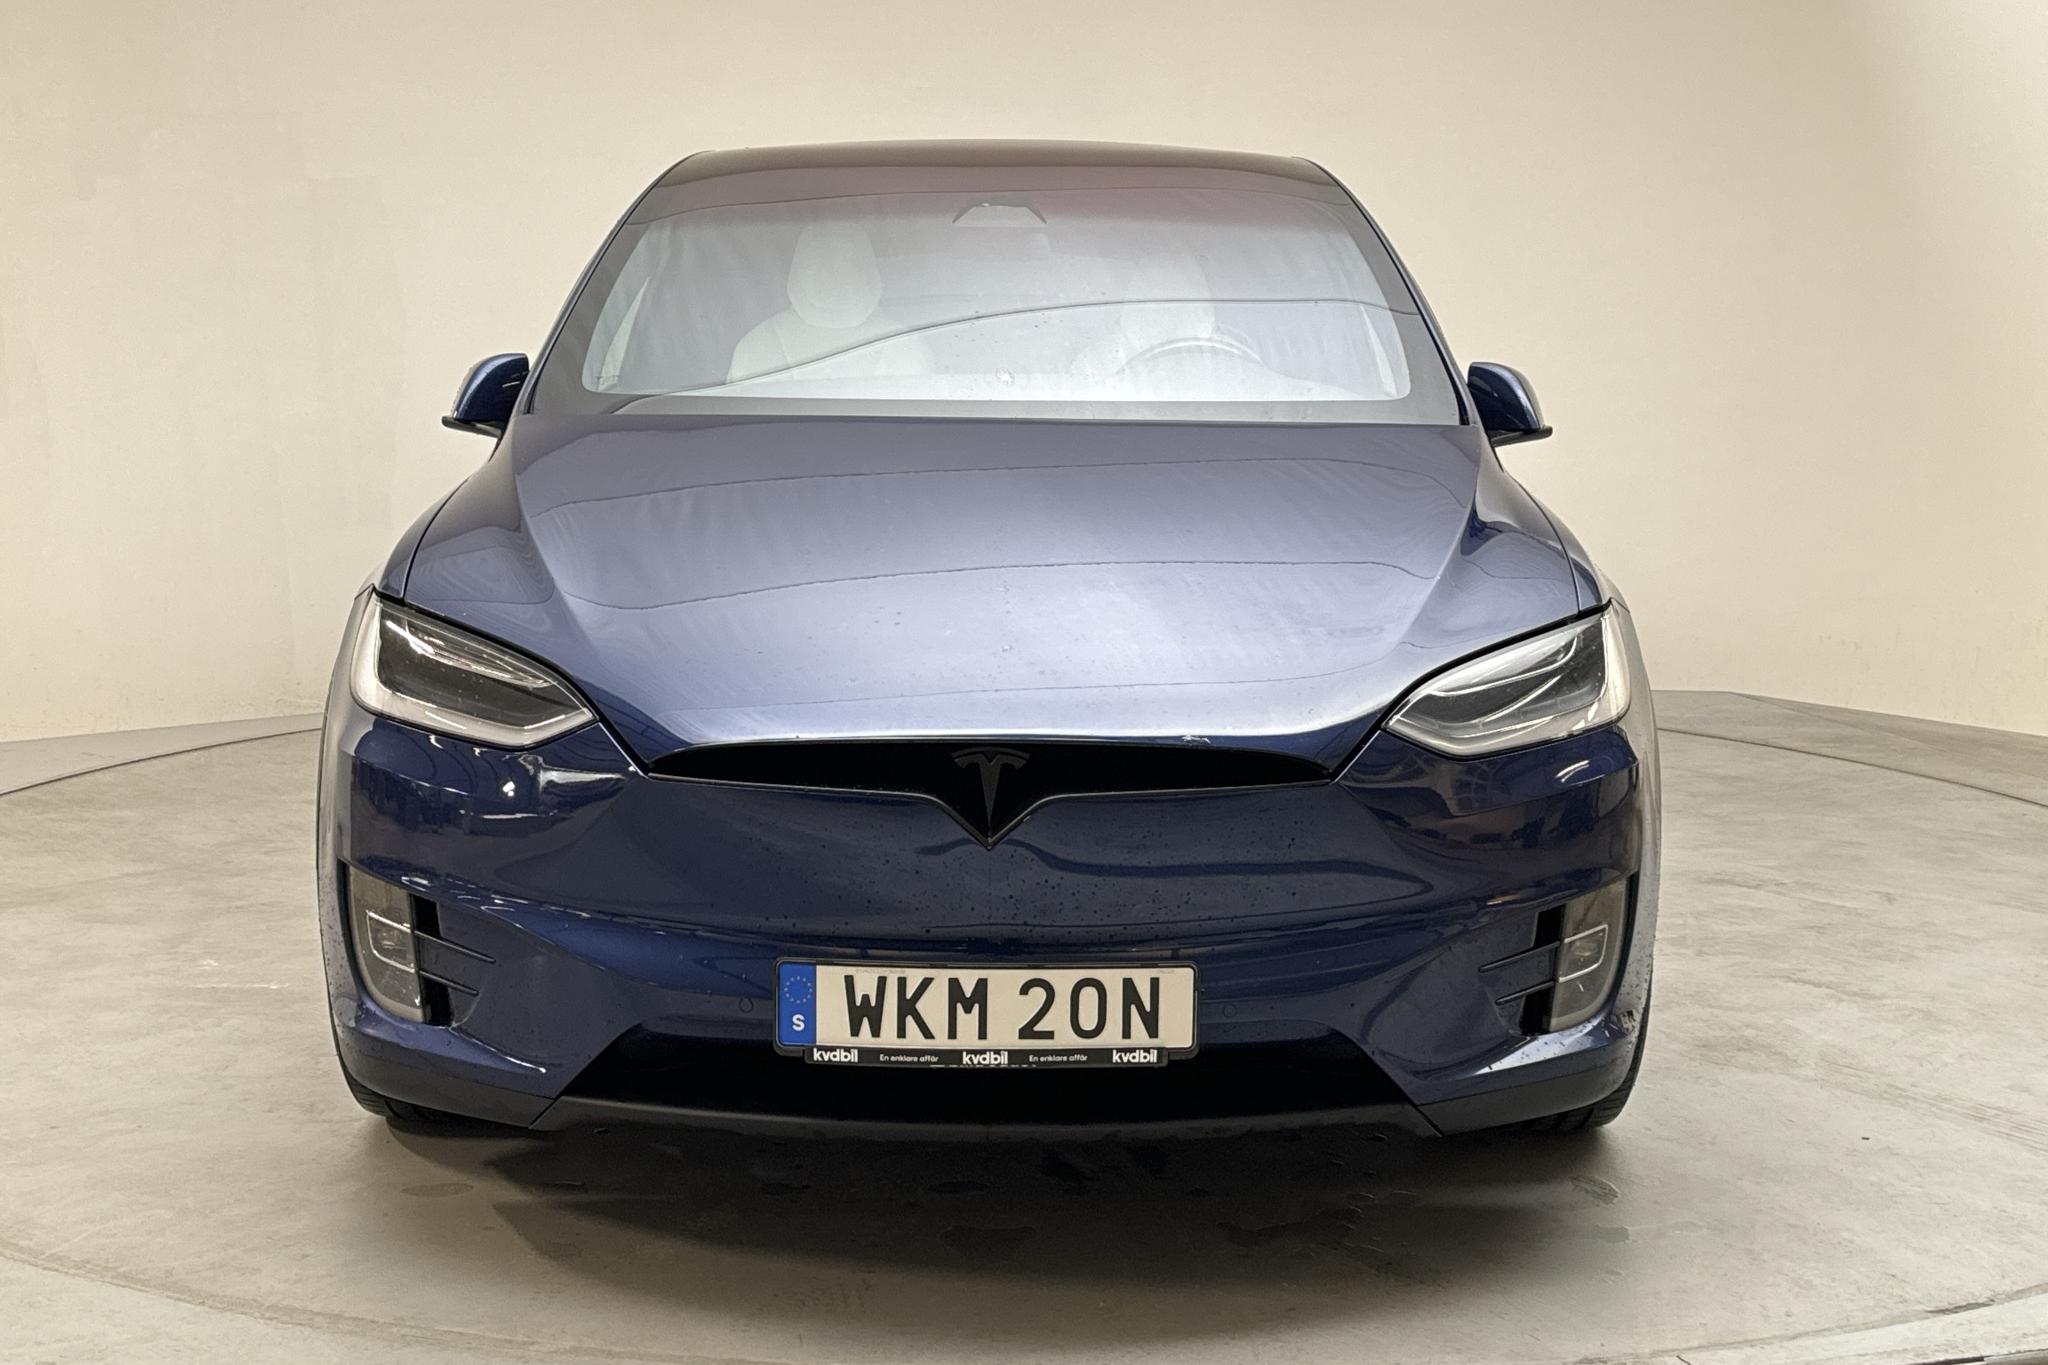 Tesla Model X 75D - 94 990 km - Automatic - blue - 2017